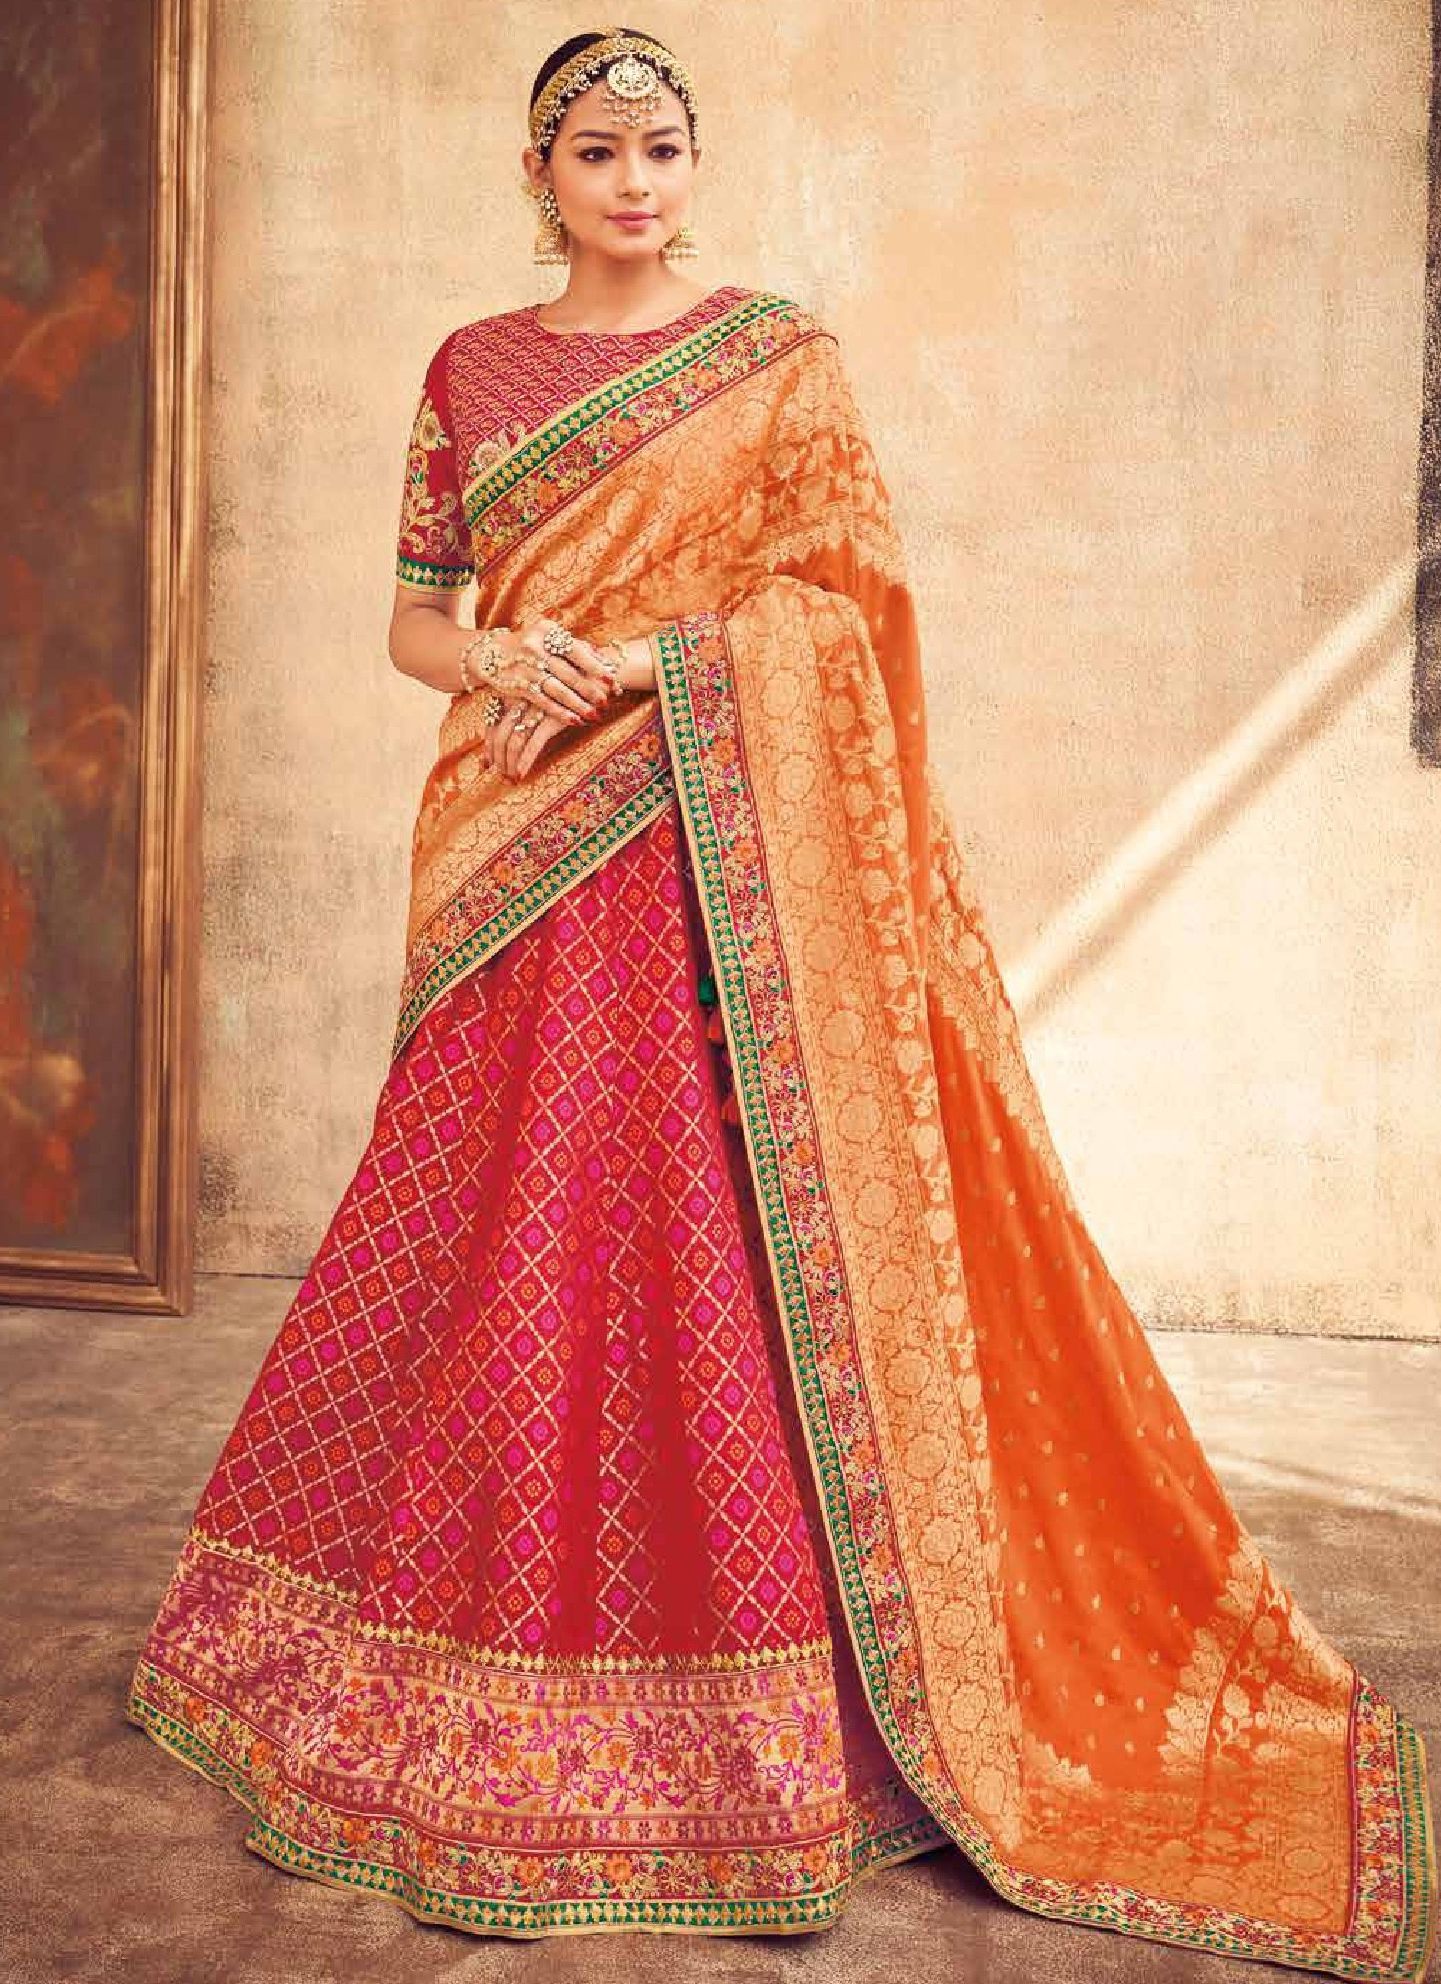 Buy Red and Orange silk Indian wedding lehenga in UK, USA and Canada